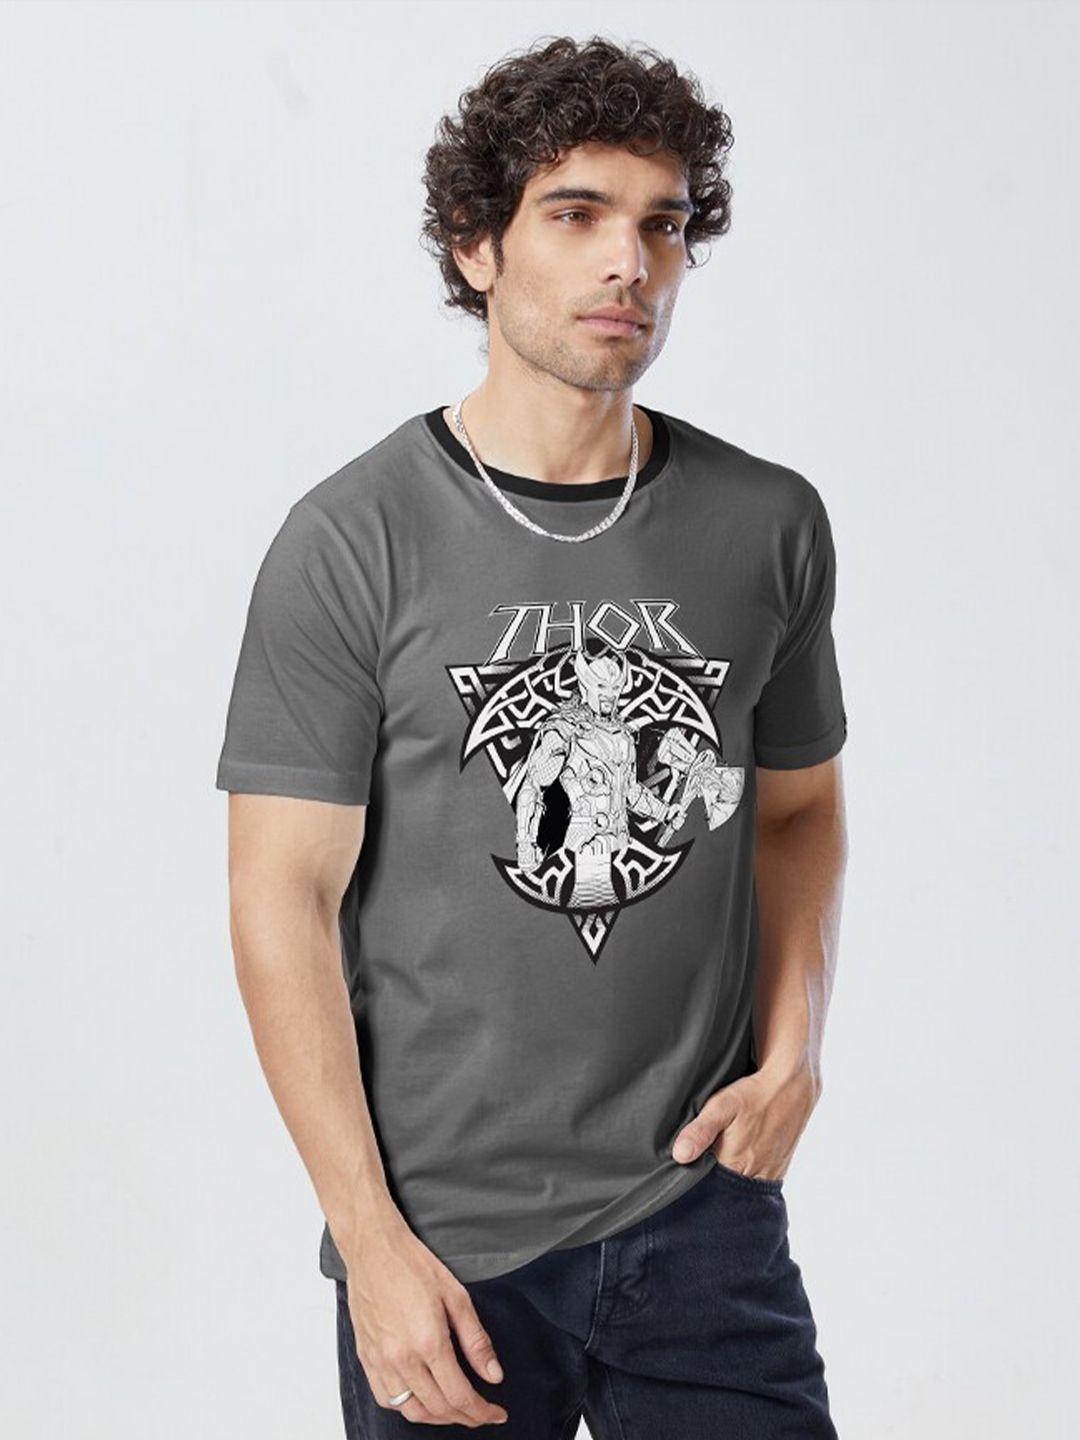 the souled store men grey printed t-shirt